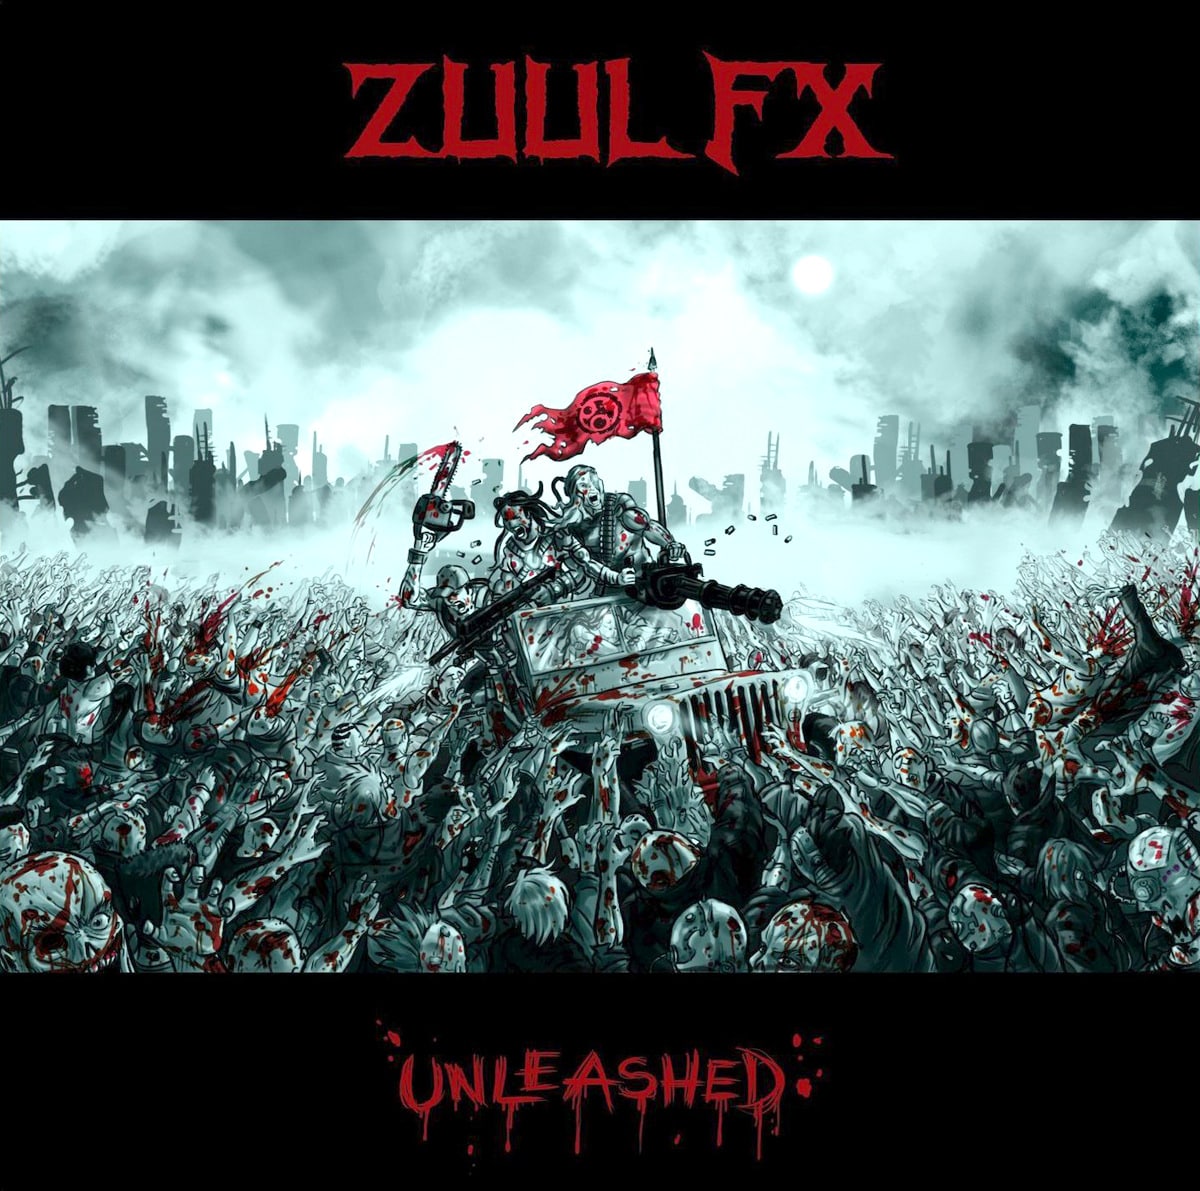 ZUUL FX - Unleashed